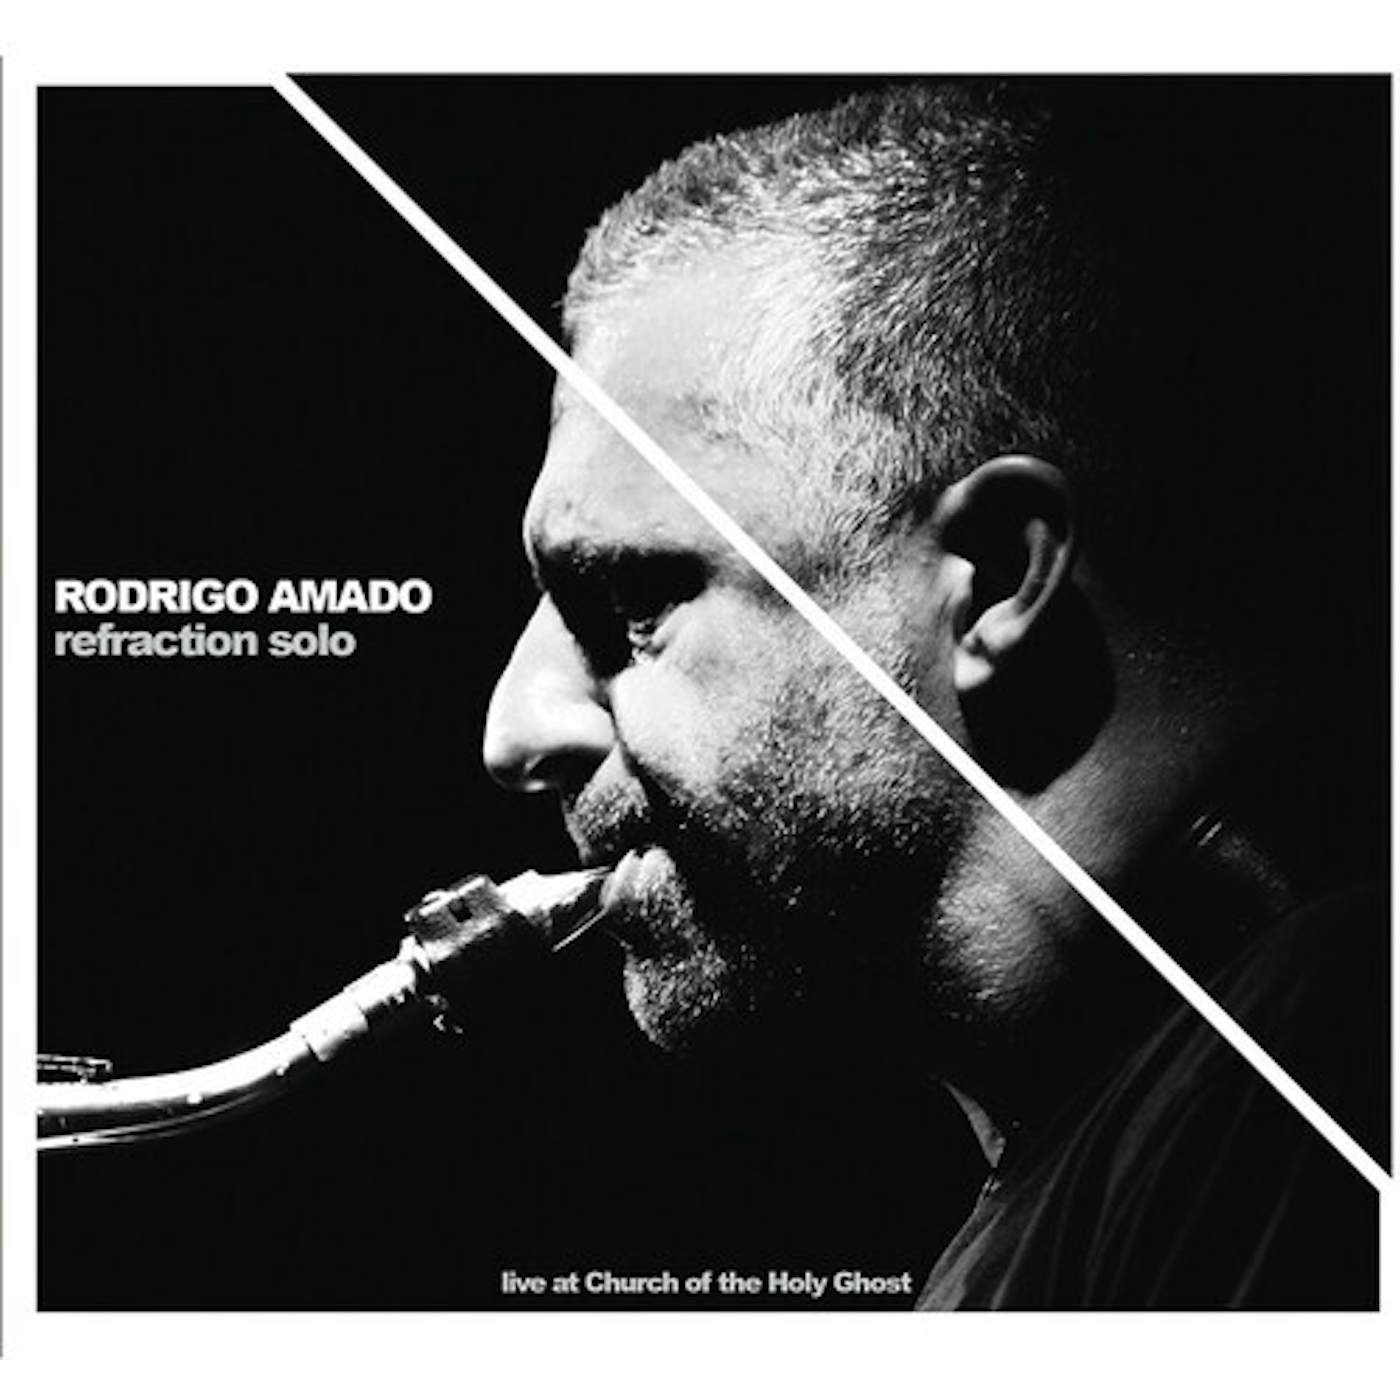 Rodrigo Amado REFRACTION SOLO CD